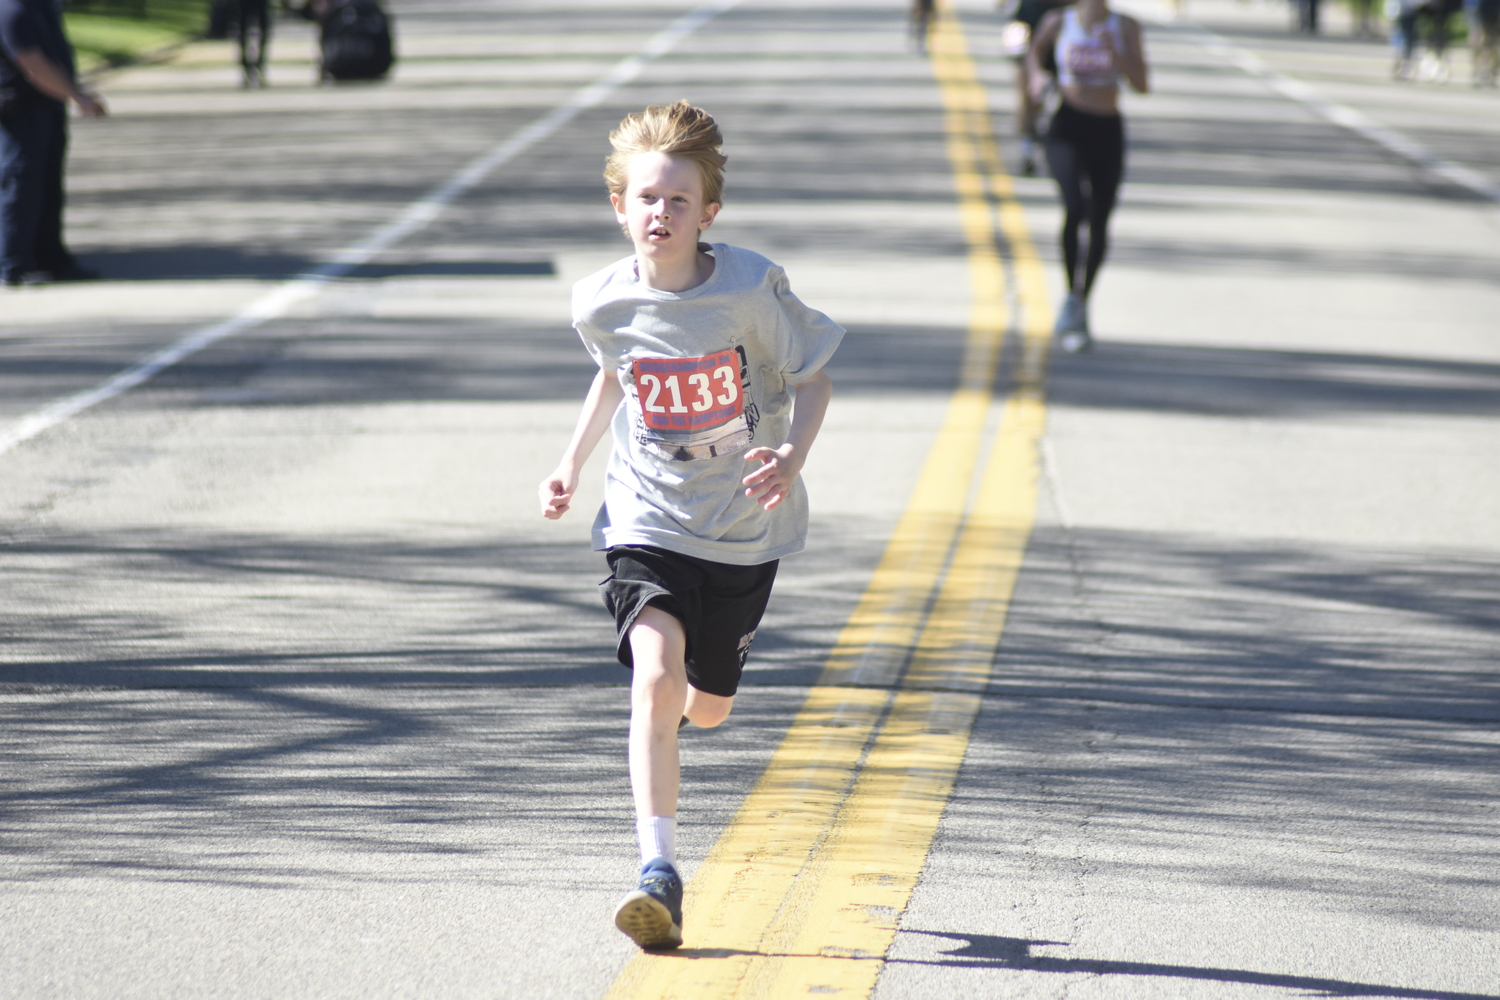 Henry Newton, 8, of New York City races toward the finish line.   DREW BUDD